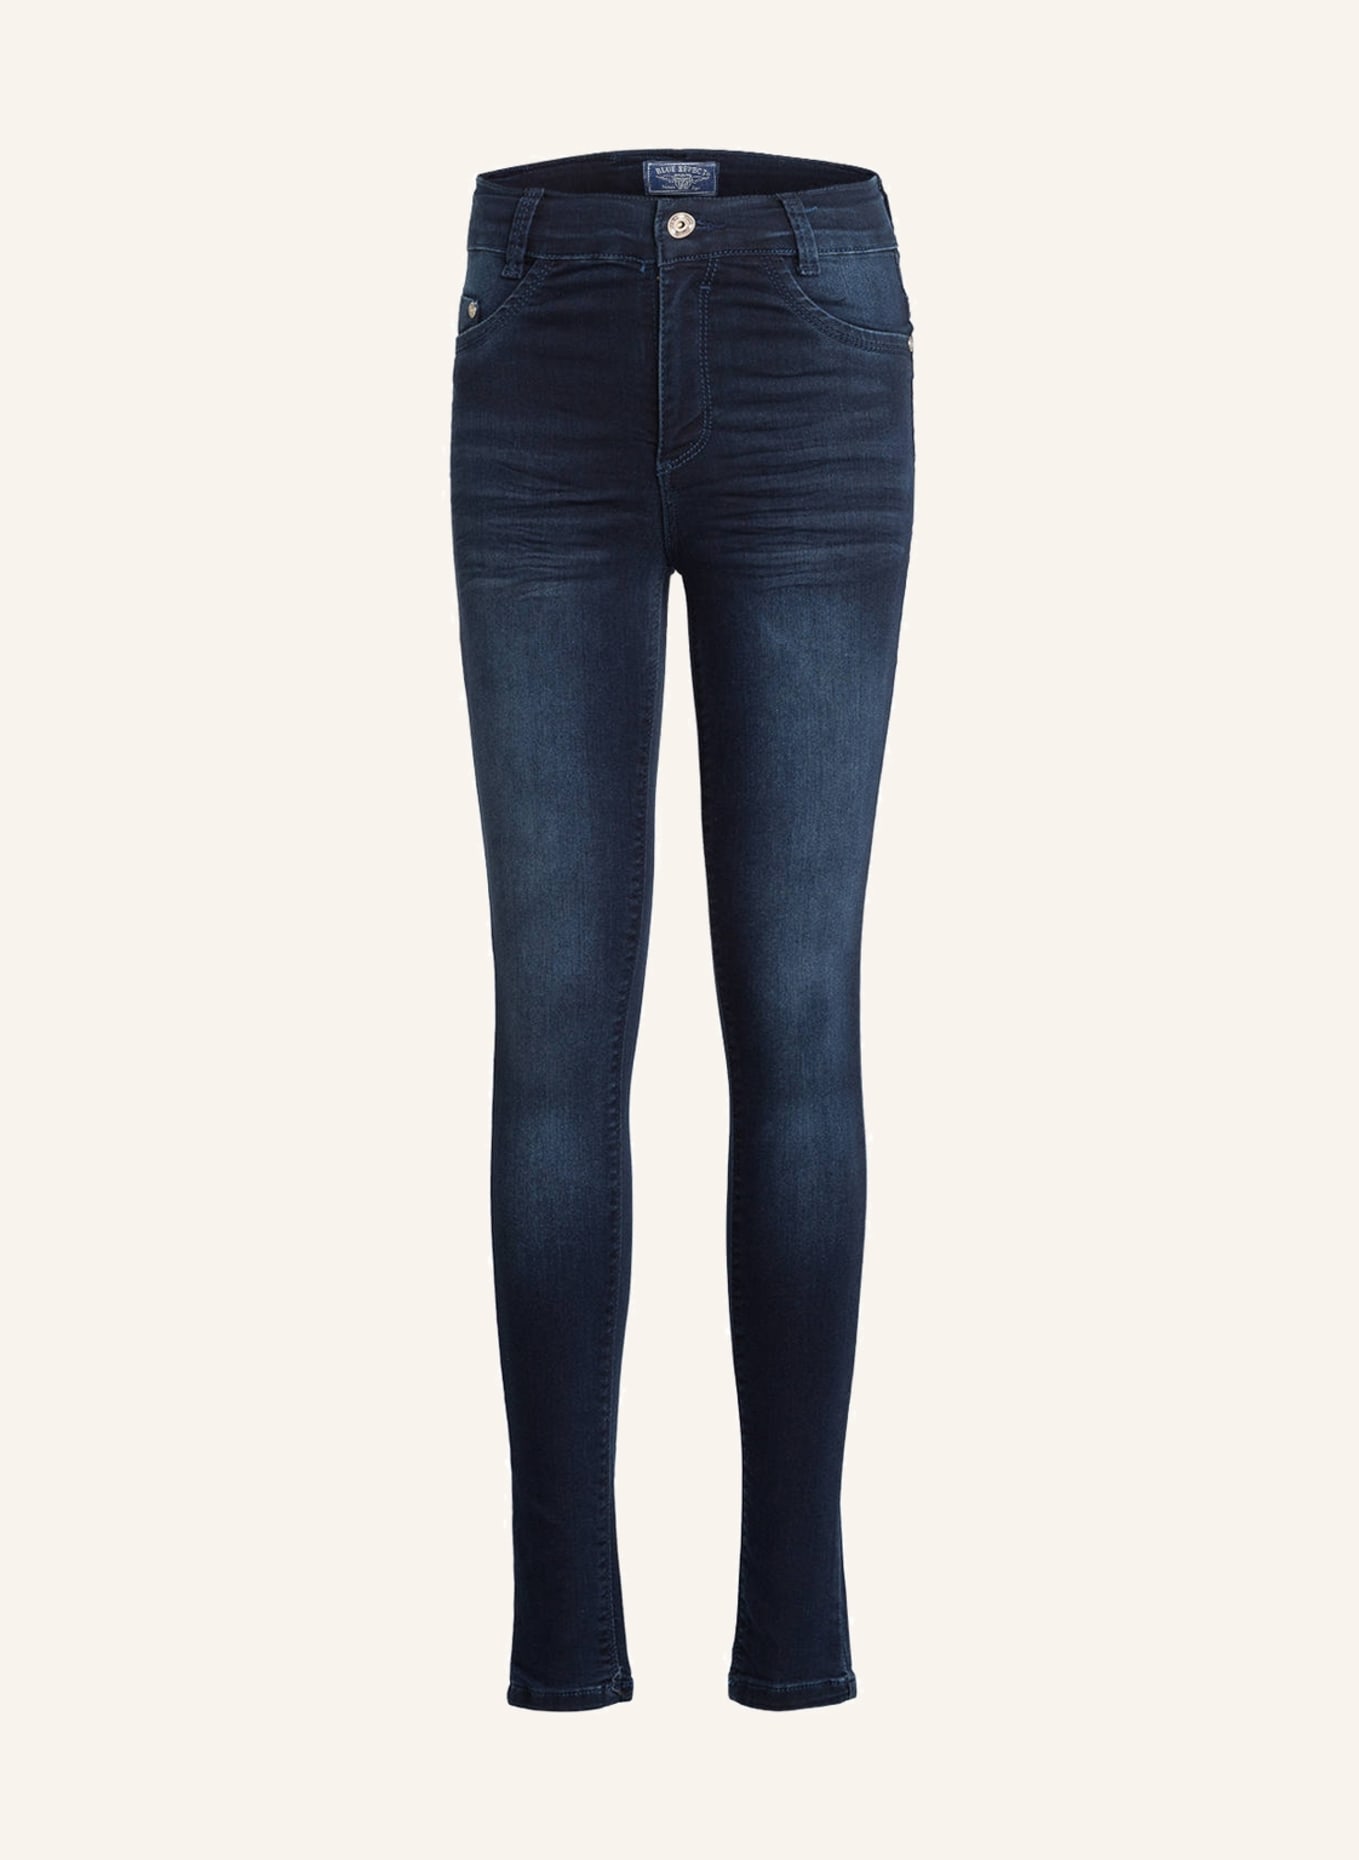 BLUE EFFECT Jeans Slim Fit, Farbe: 9595 Darkblue soft used (Bild 1)